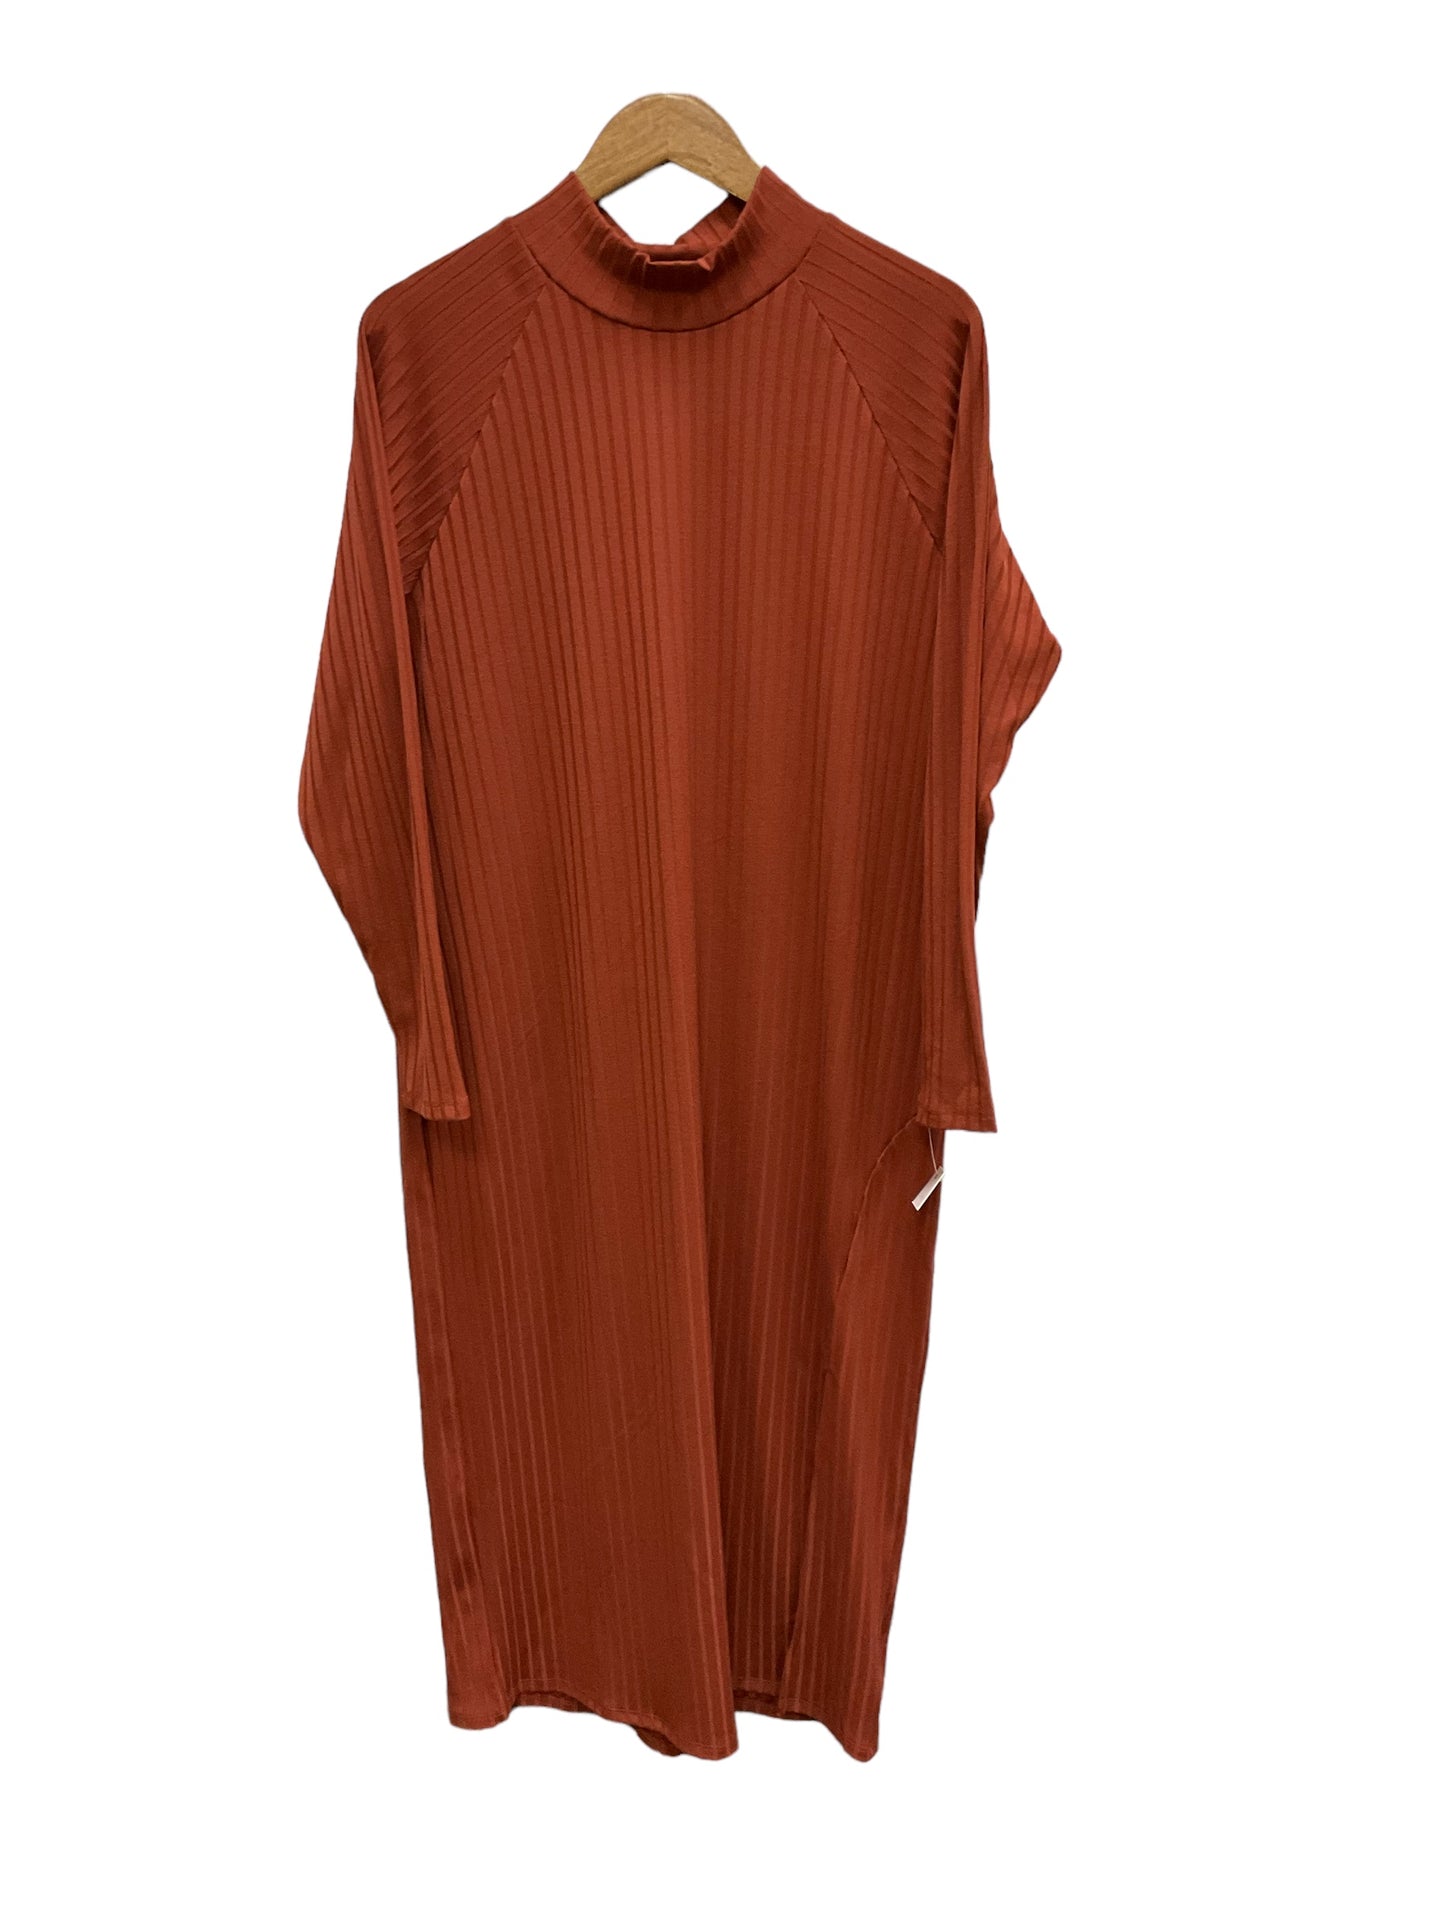 Dress Casual Midi By Ultra Flirt  Size: 2x